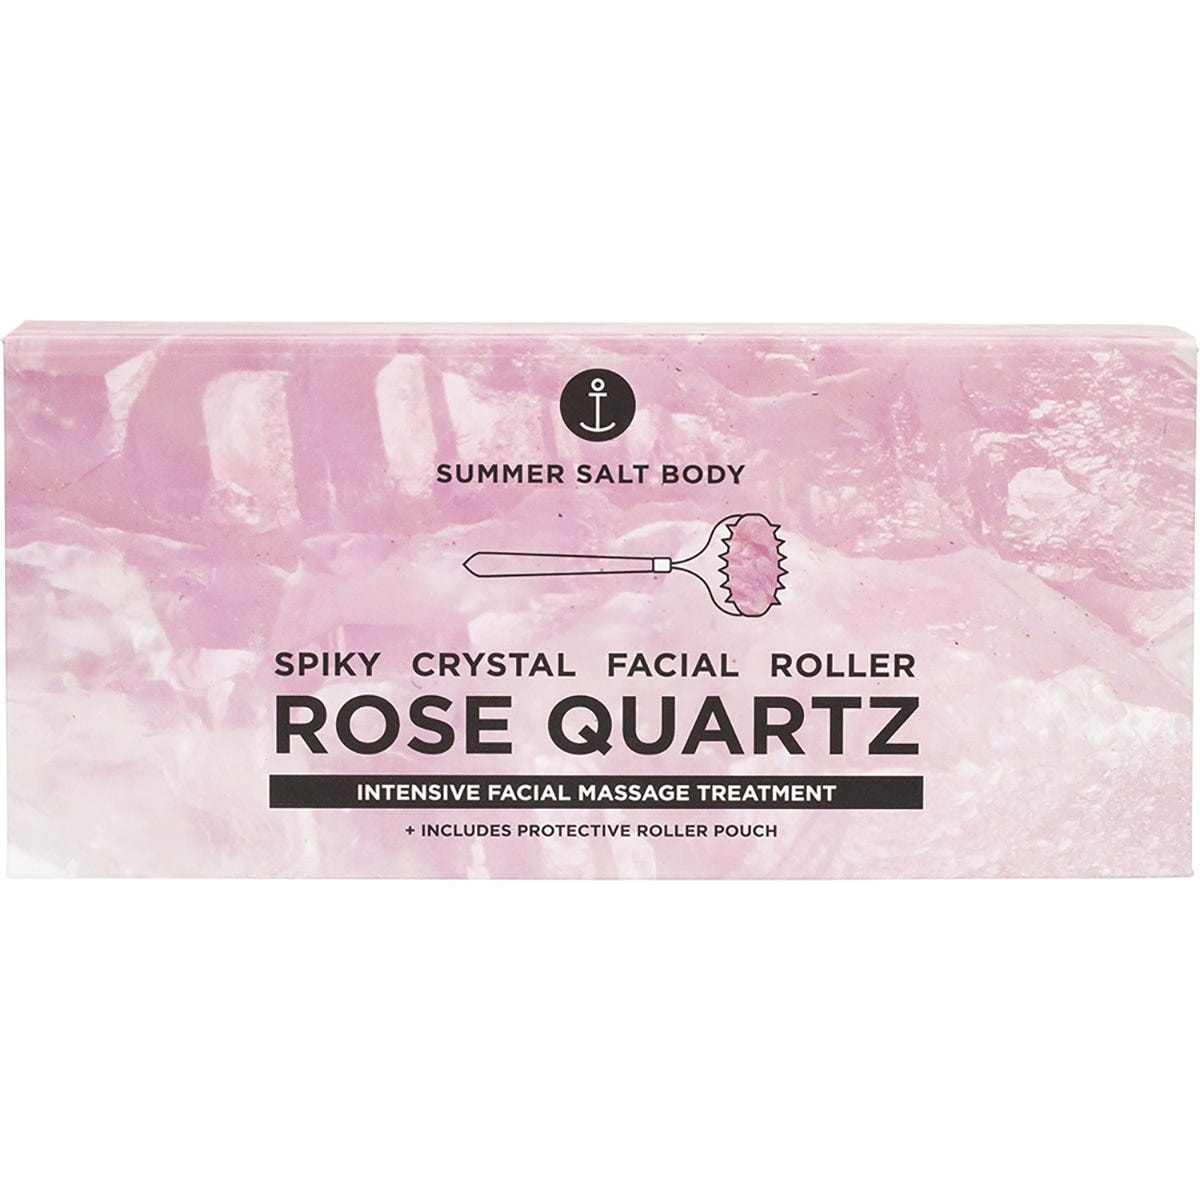 Summer Salt Body Spiky Crystal Facial Roller Rose Quartz